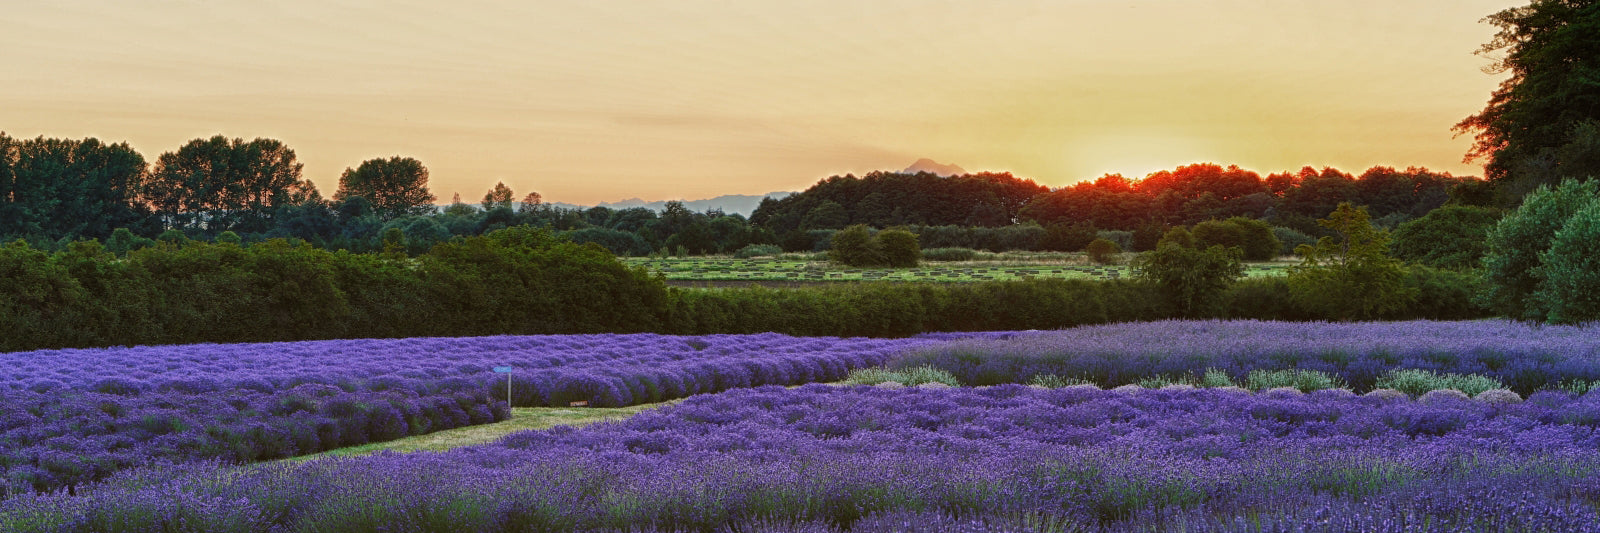 Jardin du Soleil Lavender Farm sunset